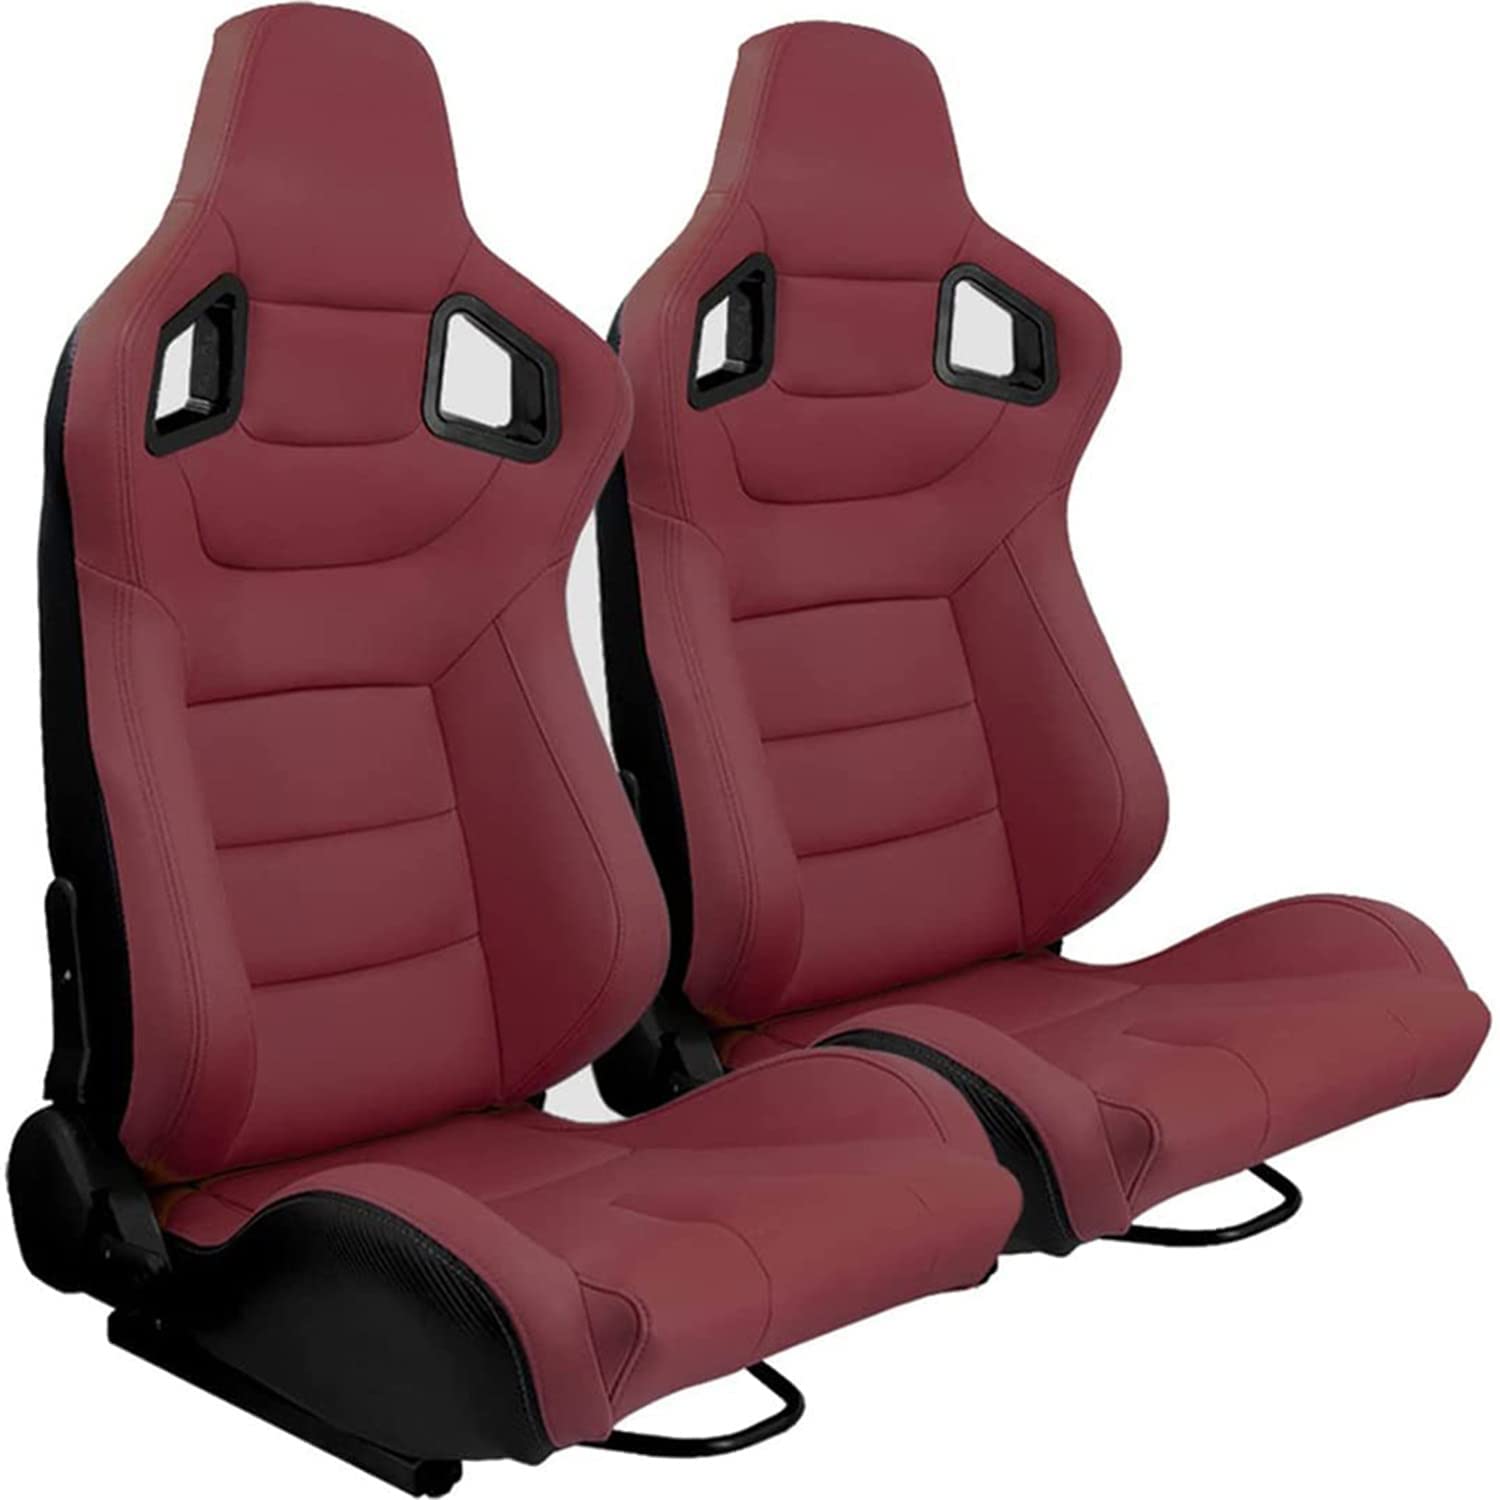 LIMEIDM Car Seat Sport Seat Bucket Seat Racing Seat Half Shell Seat Racing Seat Set of 2 Red